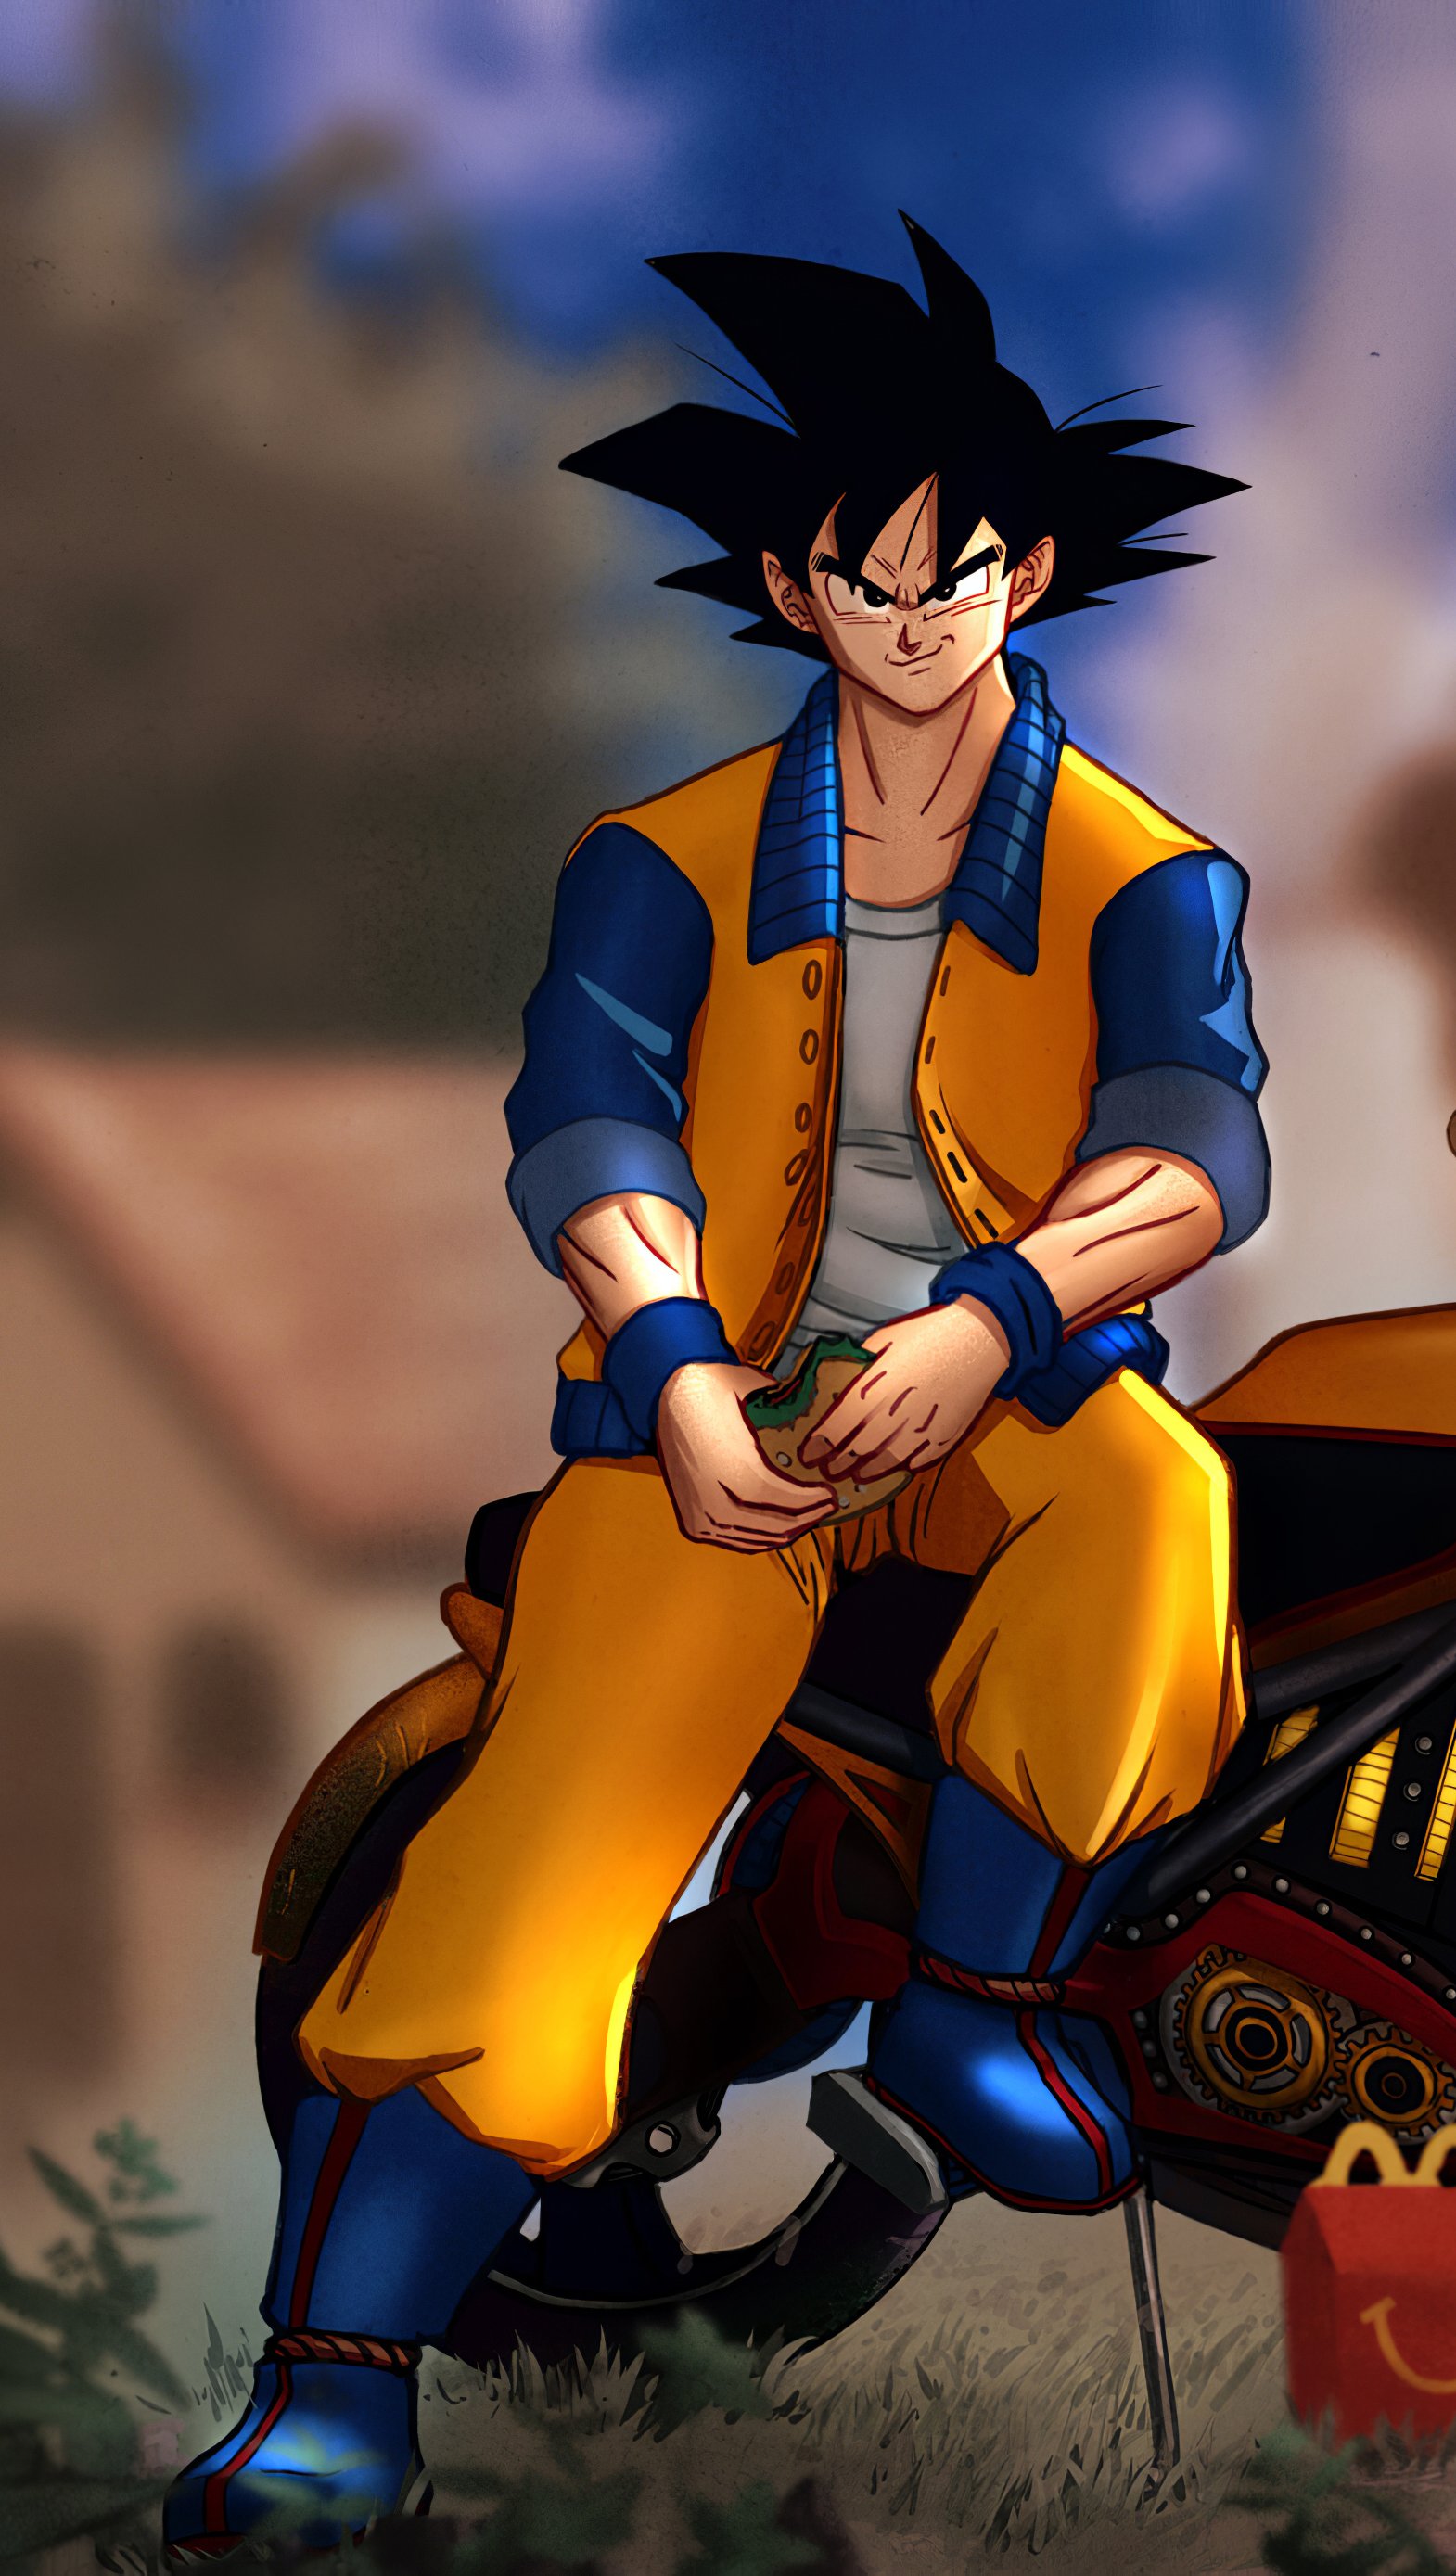 Goku en motocicleta Fondo de pantalla 4k Ultra HD ID:5238